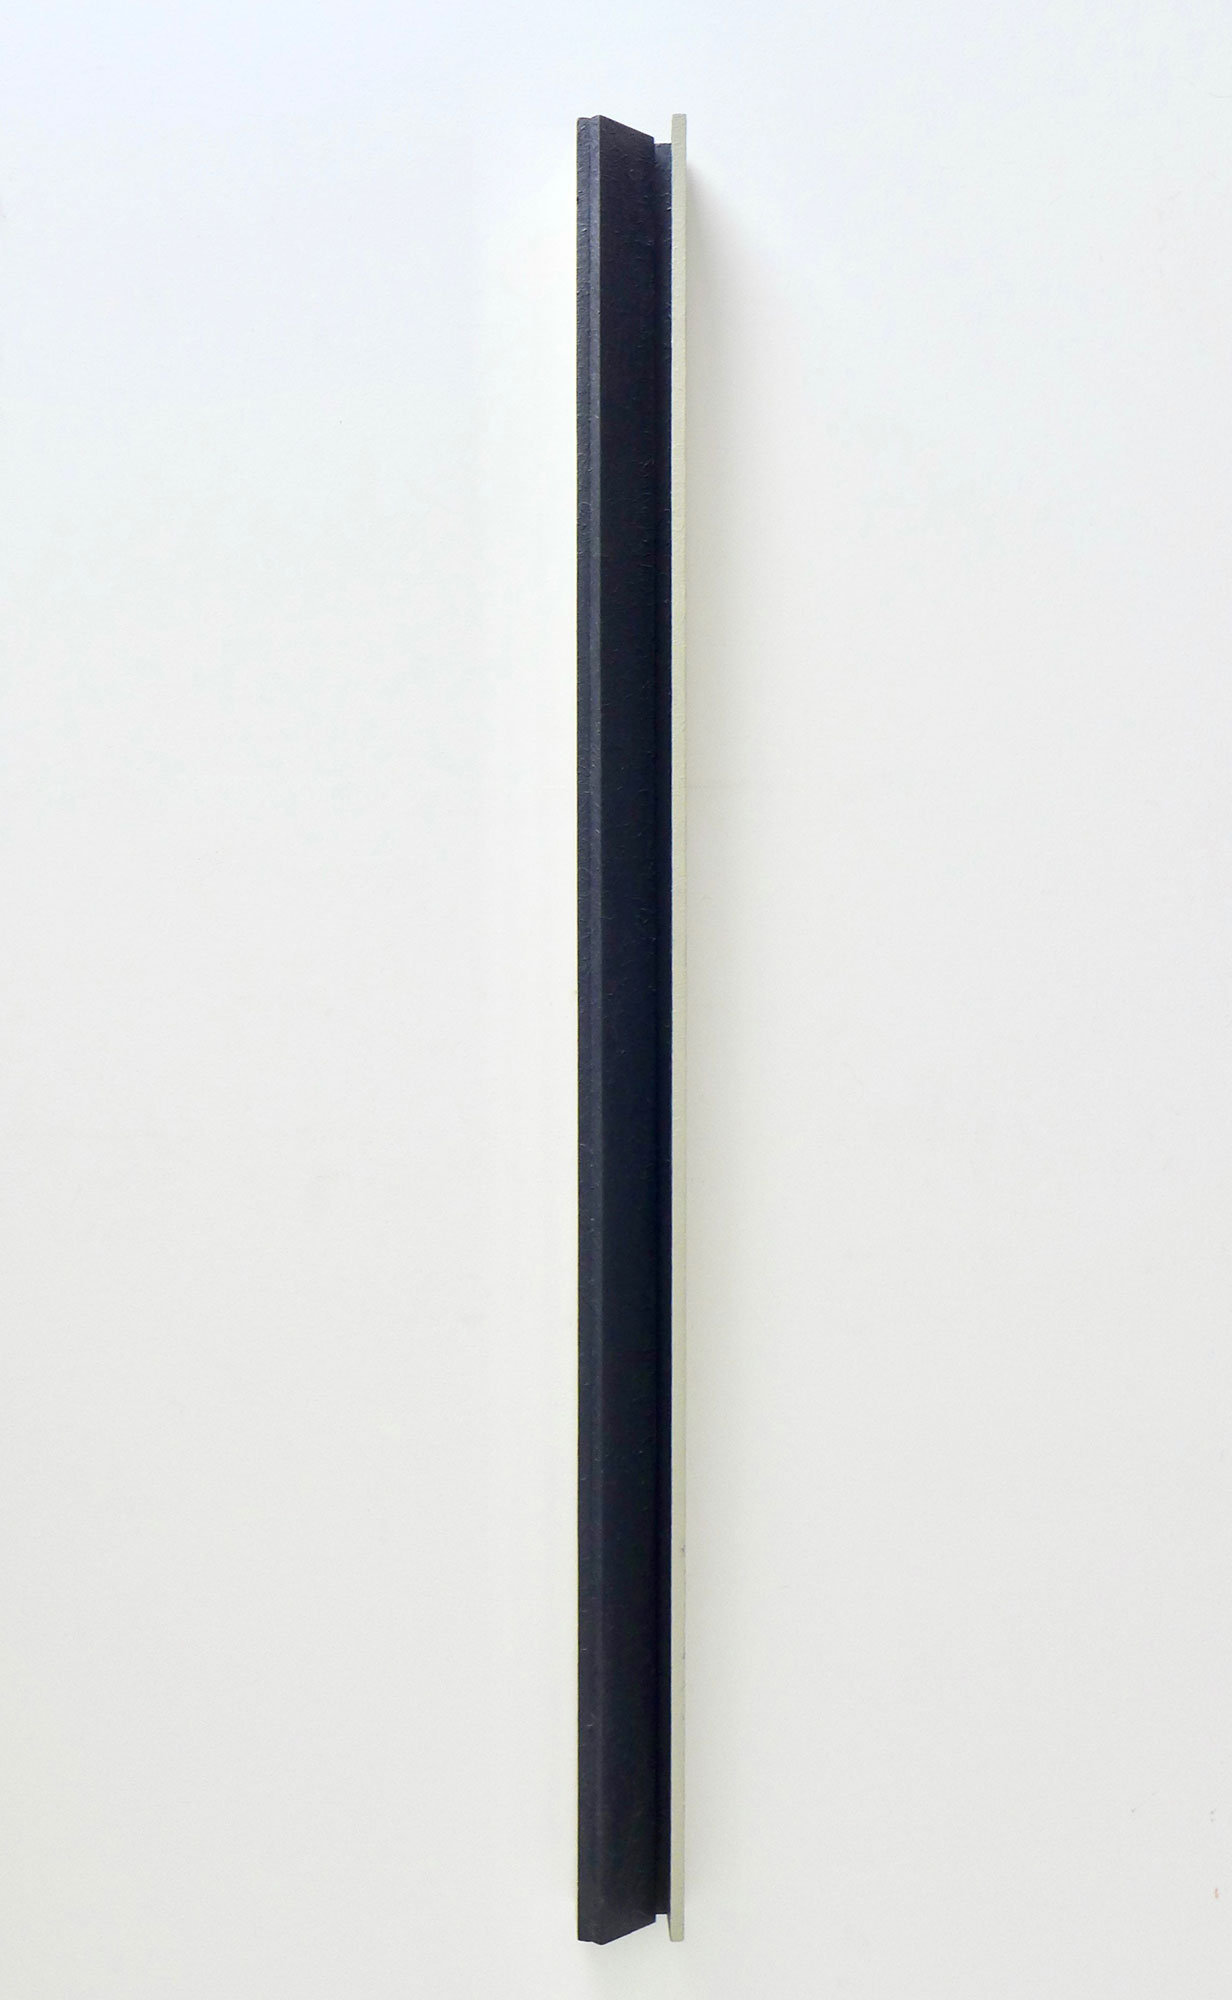 Kenneth Dingwall, Reserved, 1984, acrylic on wood, 160cm x 10cm x 7cm